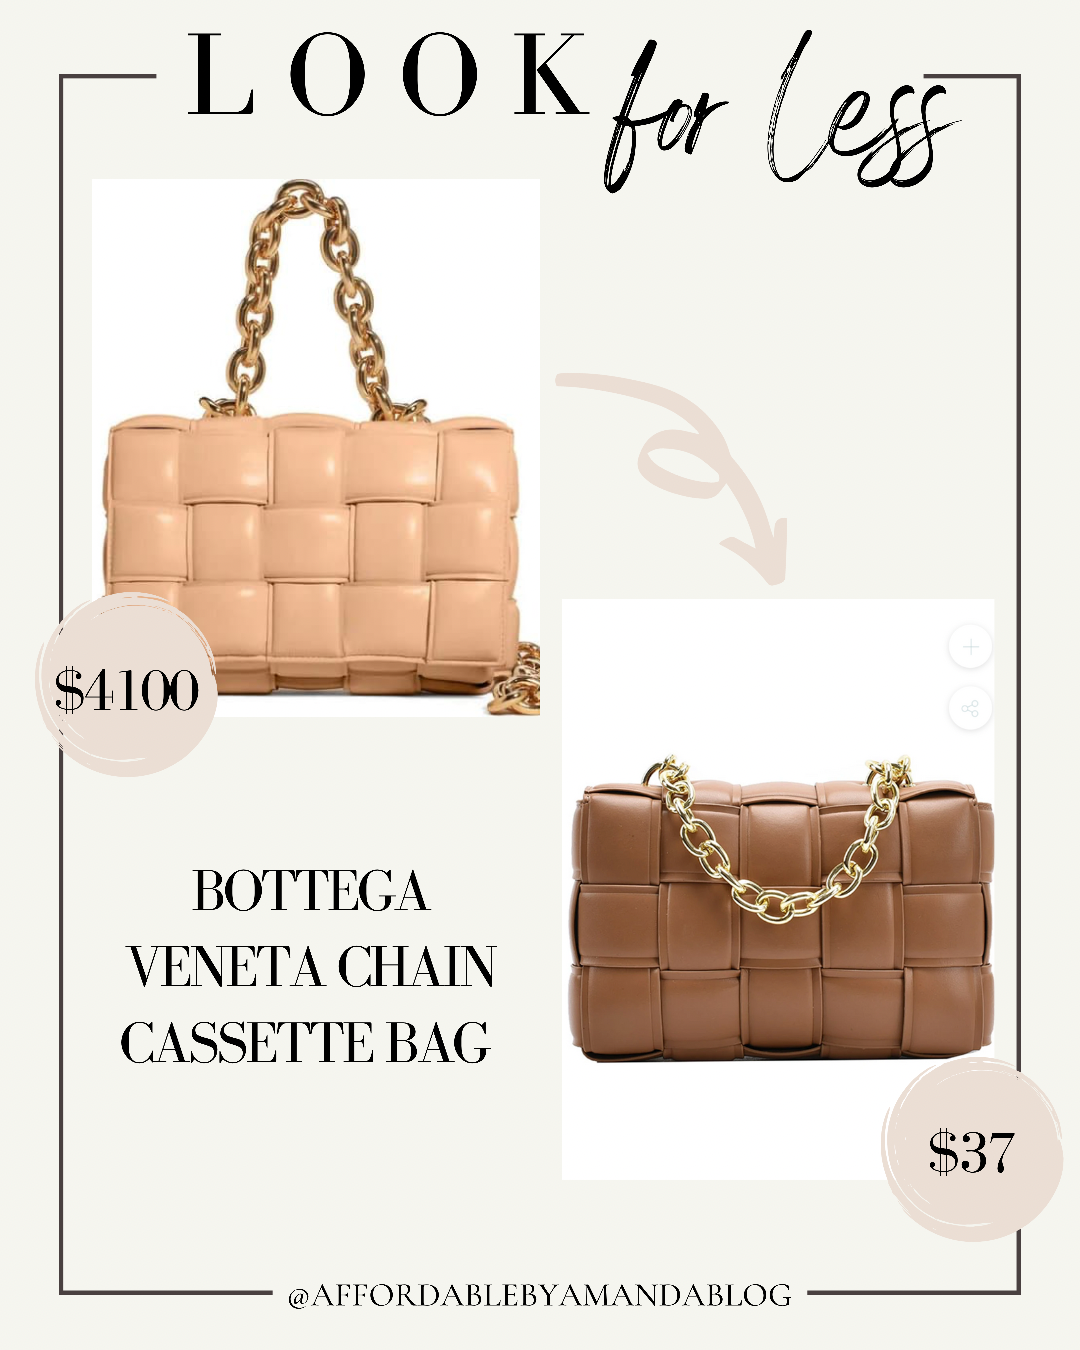 BOTTEGA VENETA Calfskin The Pouch Chain Cammello | Look for Less | Affordable by Amanda